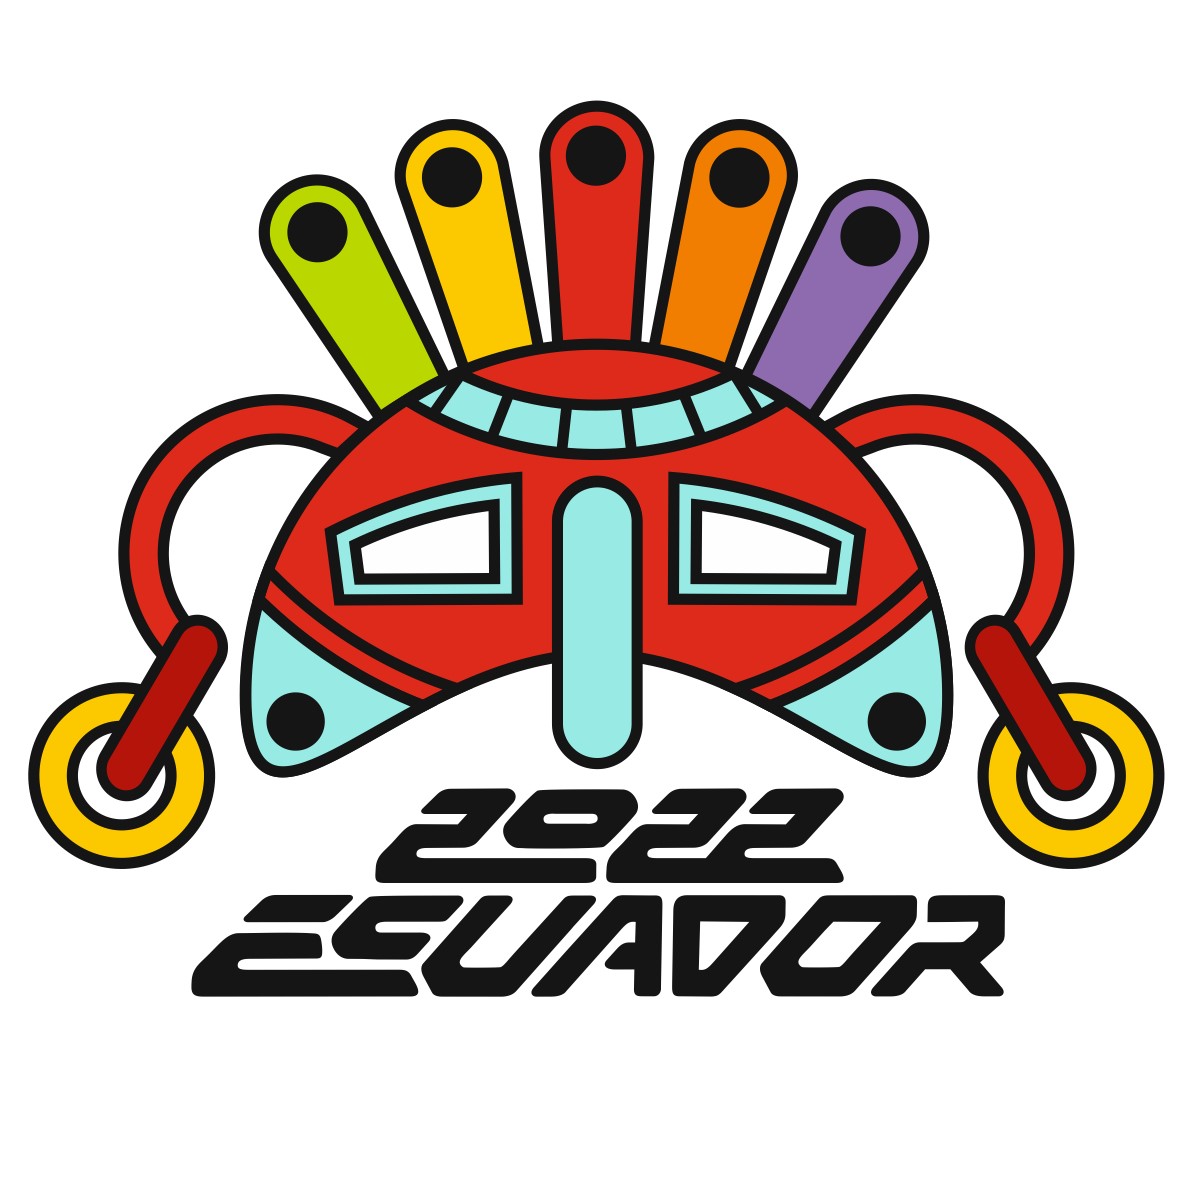 Ecuador_2022 logo design by logo designer Kovalen.com for your inspiration and for the worlds largest logo competition